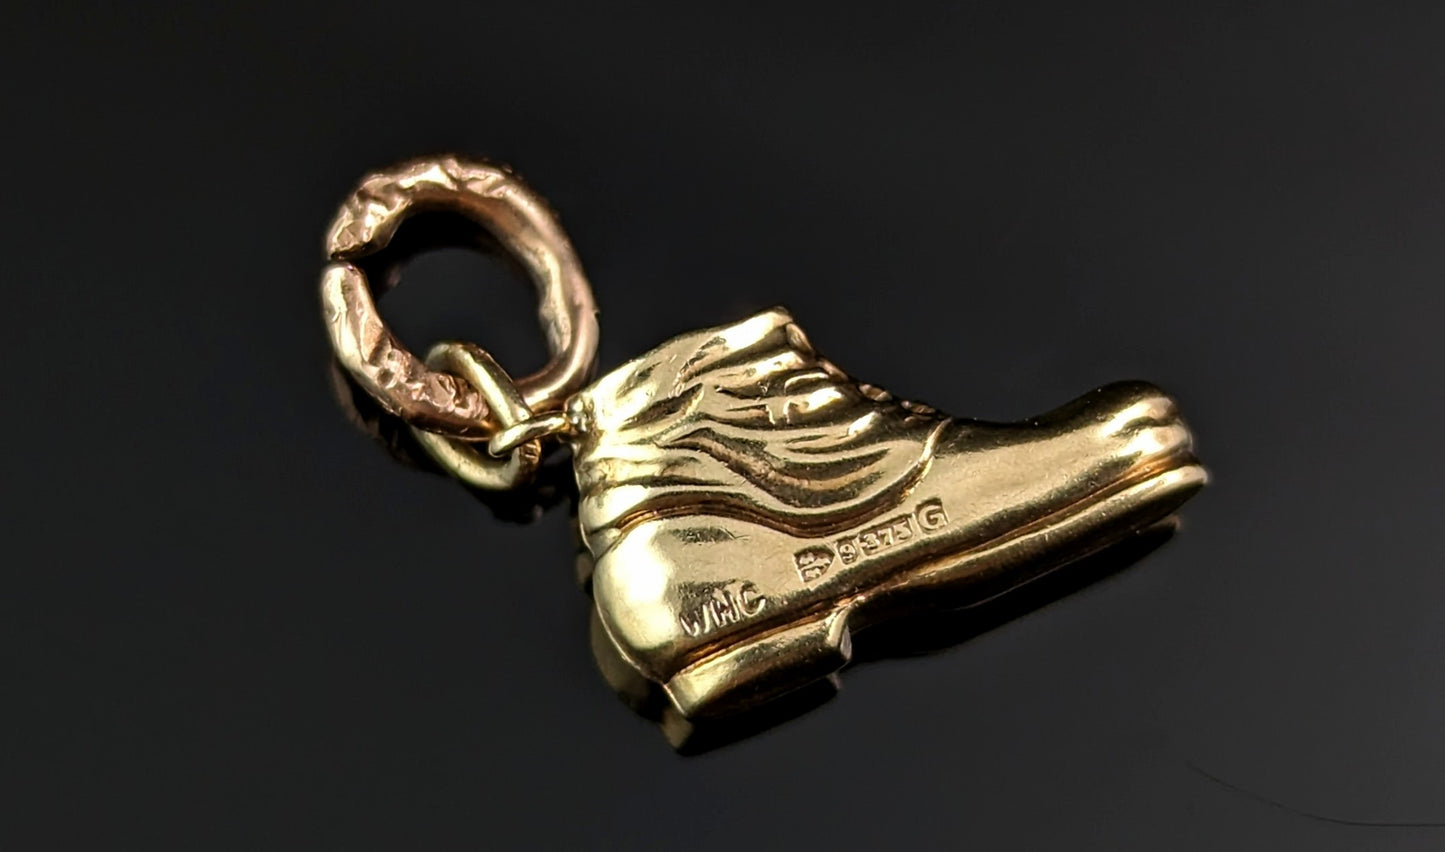 Vintage 9k gold novelty boot charm, pendant